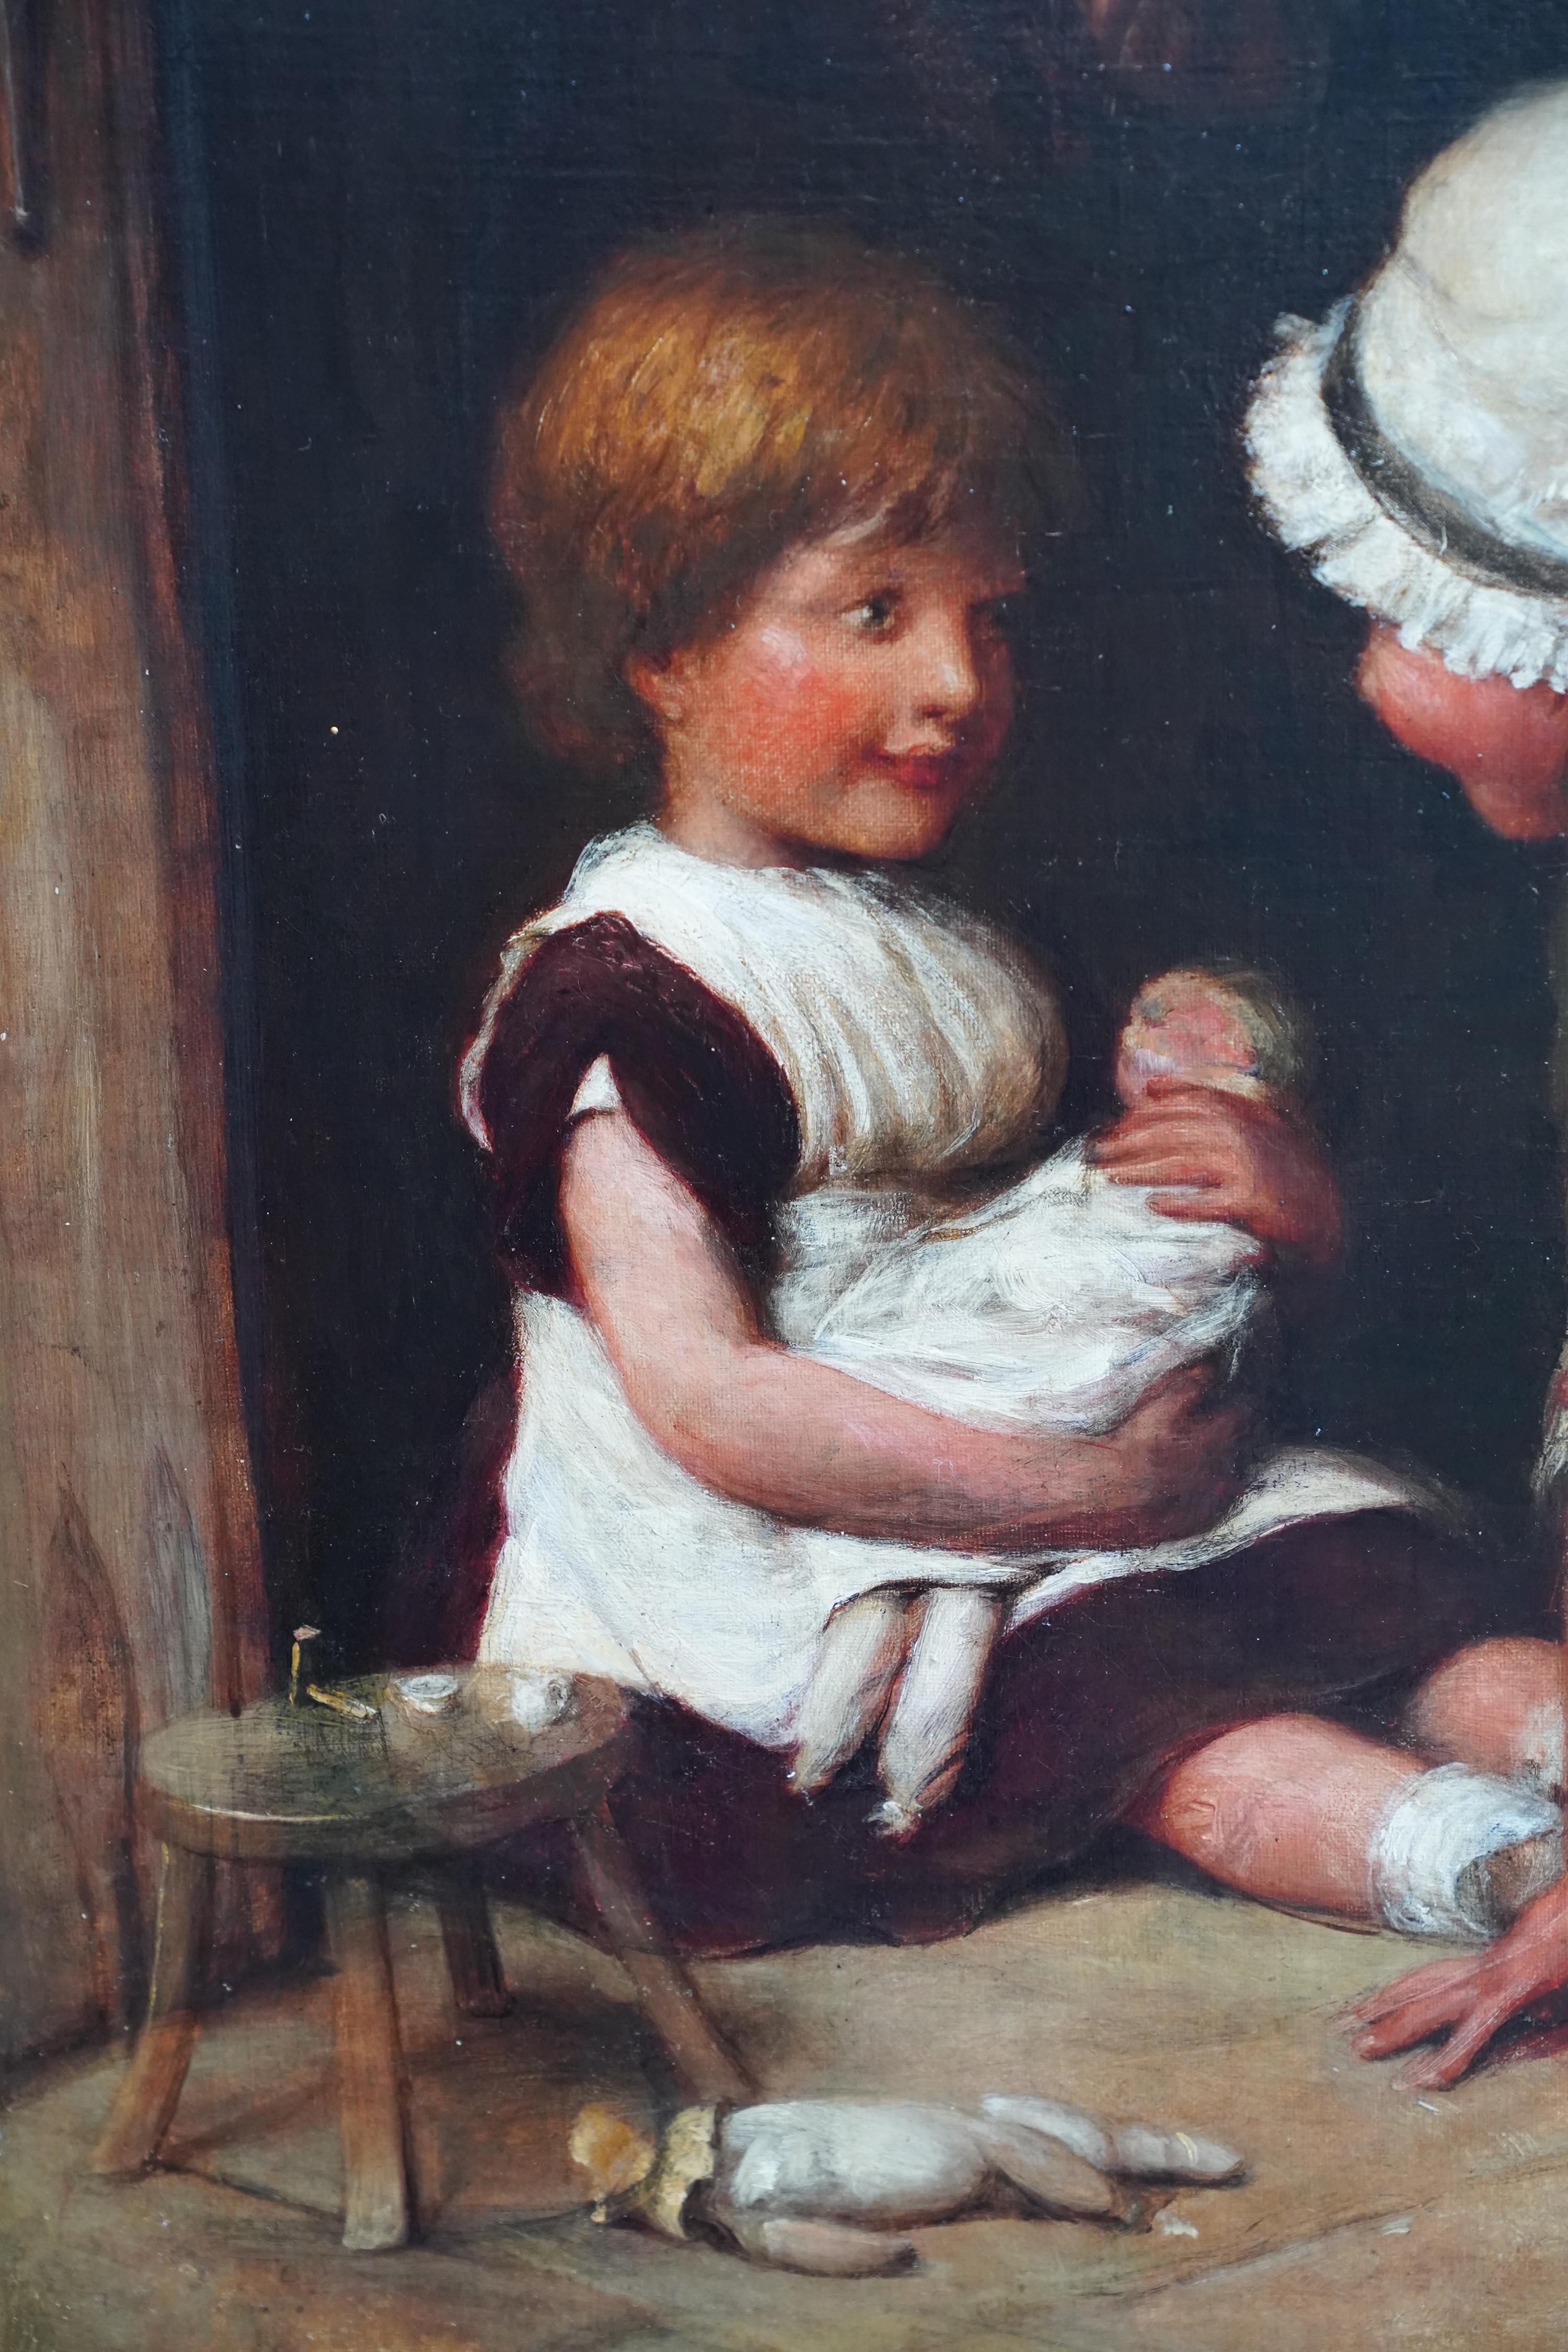 Portrait of Children at Play - British Victorian Genre art oil painting interior 1